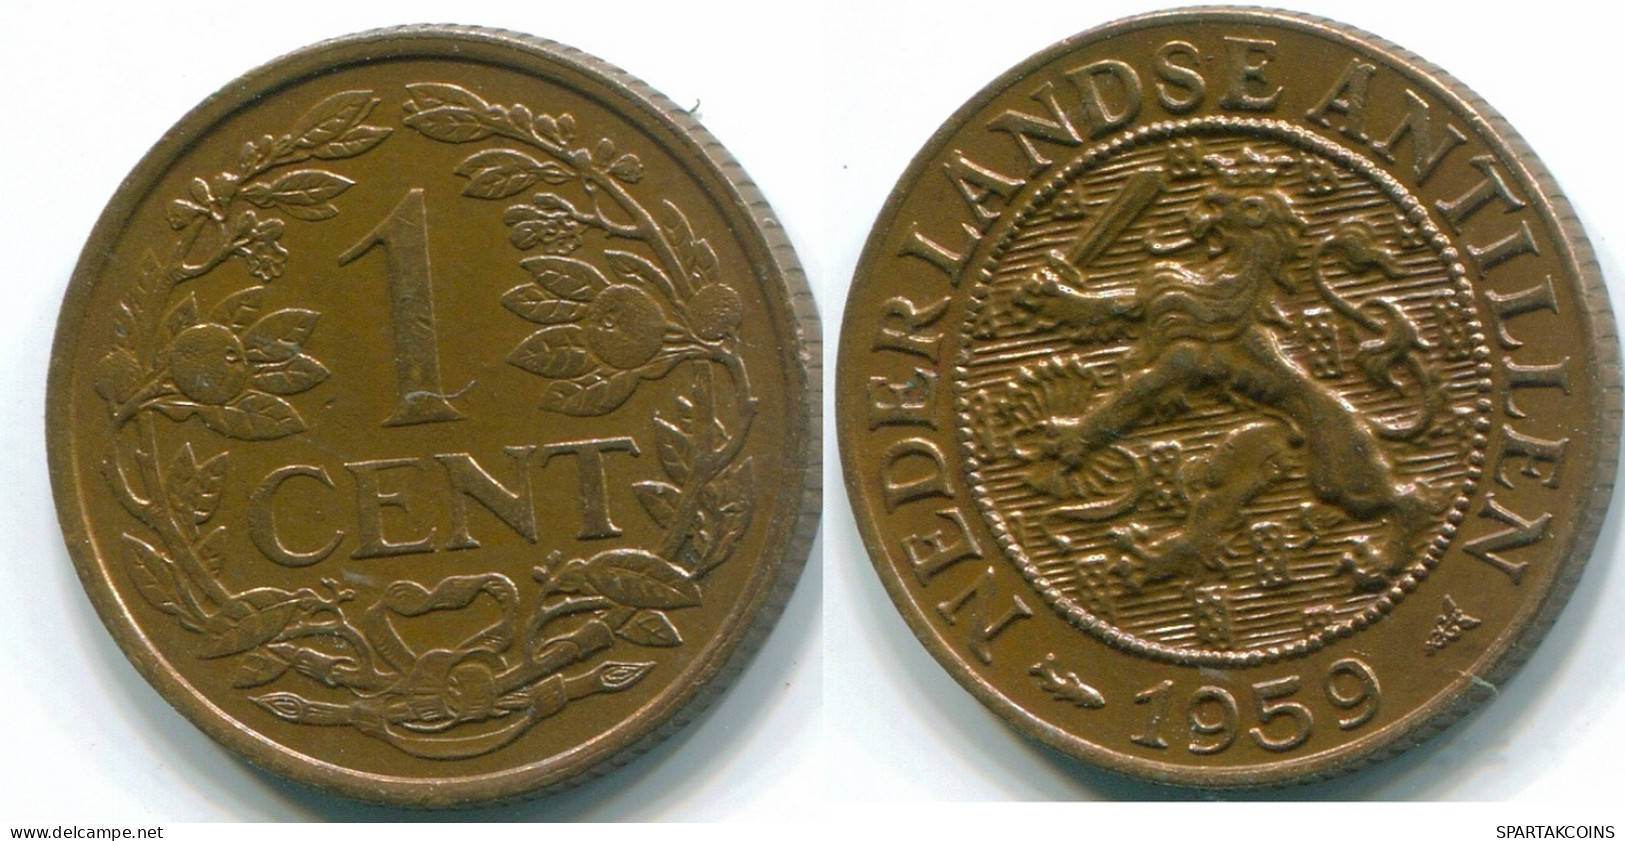 1 CENT 1959 NETHERLANDS ANTILLES Bronze Fish Colonial Coin #S11044.U.A - Netherlands Antilles